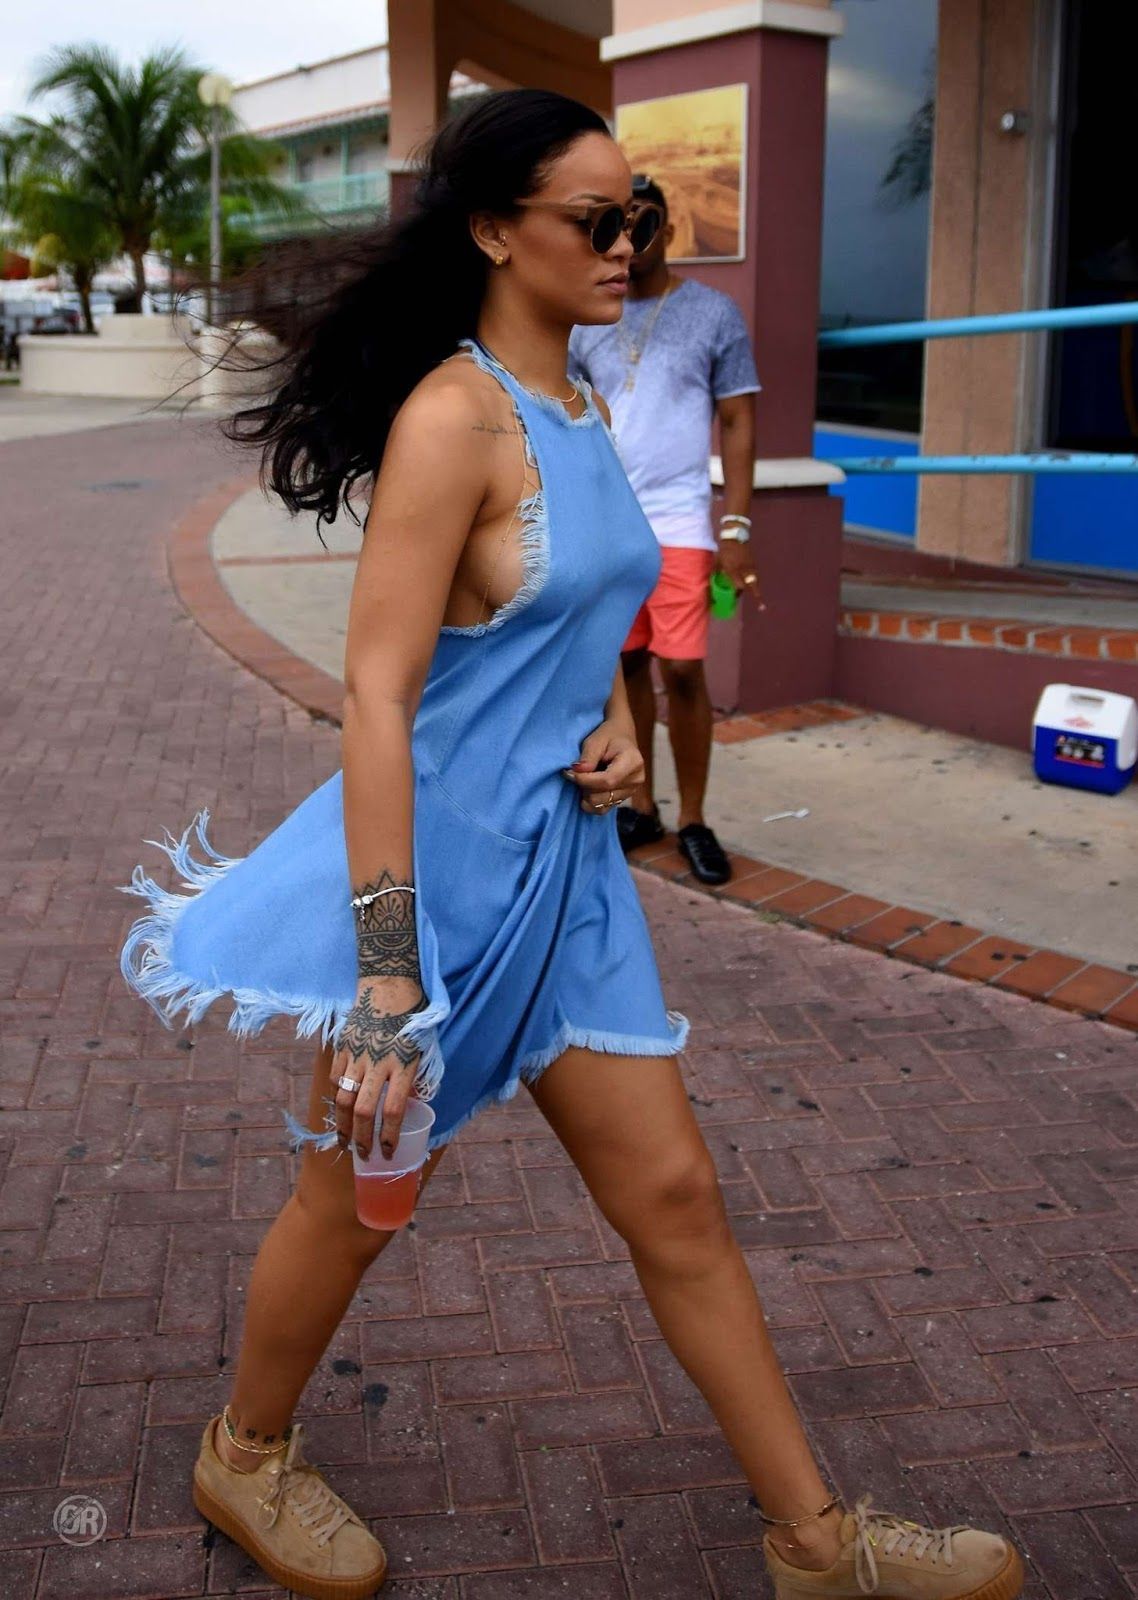 Rihanna wearing a short blue dress in Barbados - Photo Rihanna 2016 -   23 rihanna style 2016
 ideas